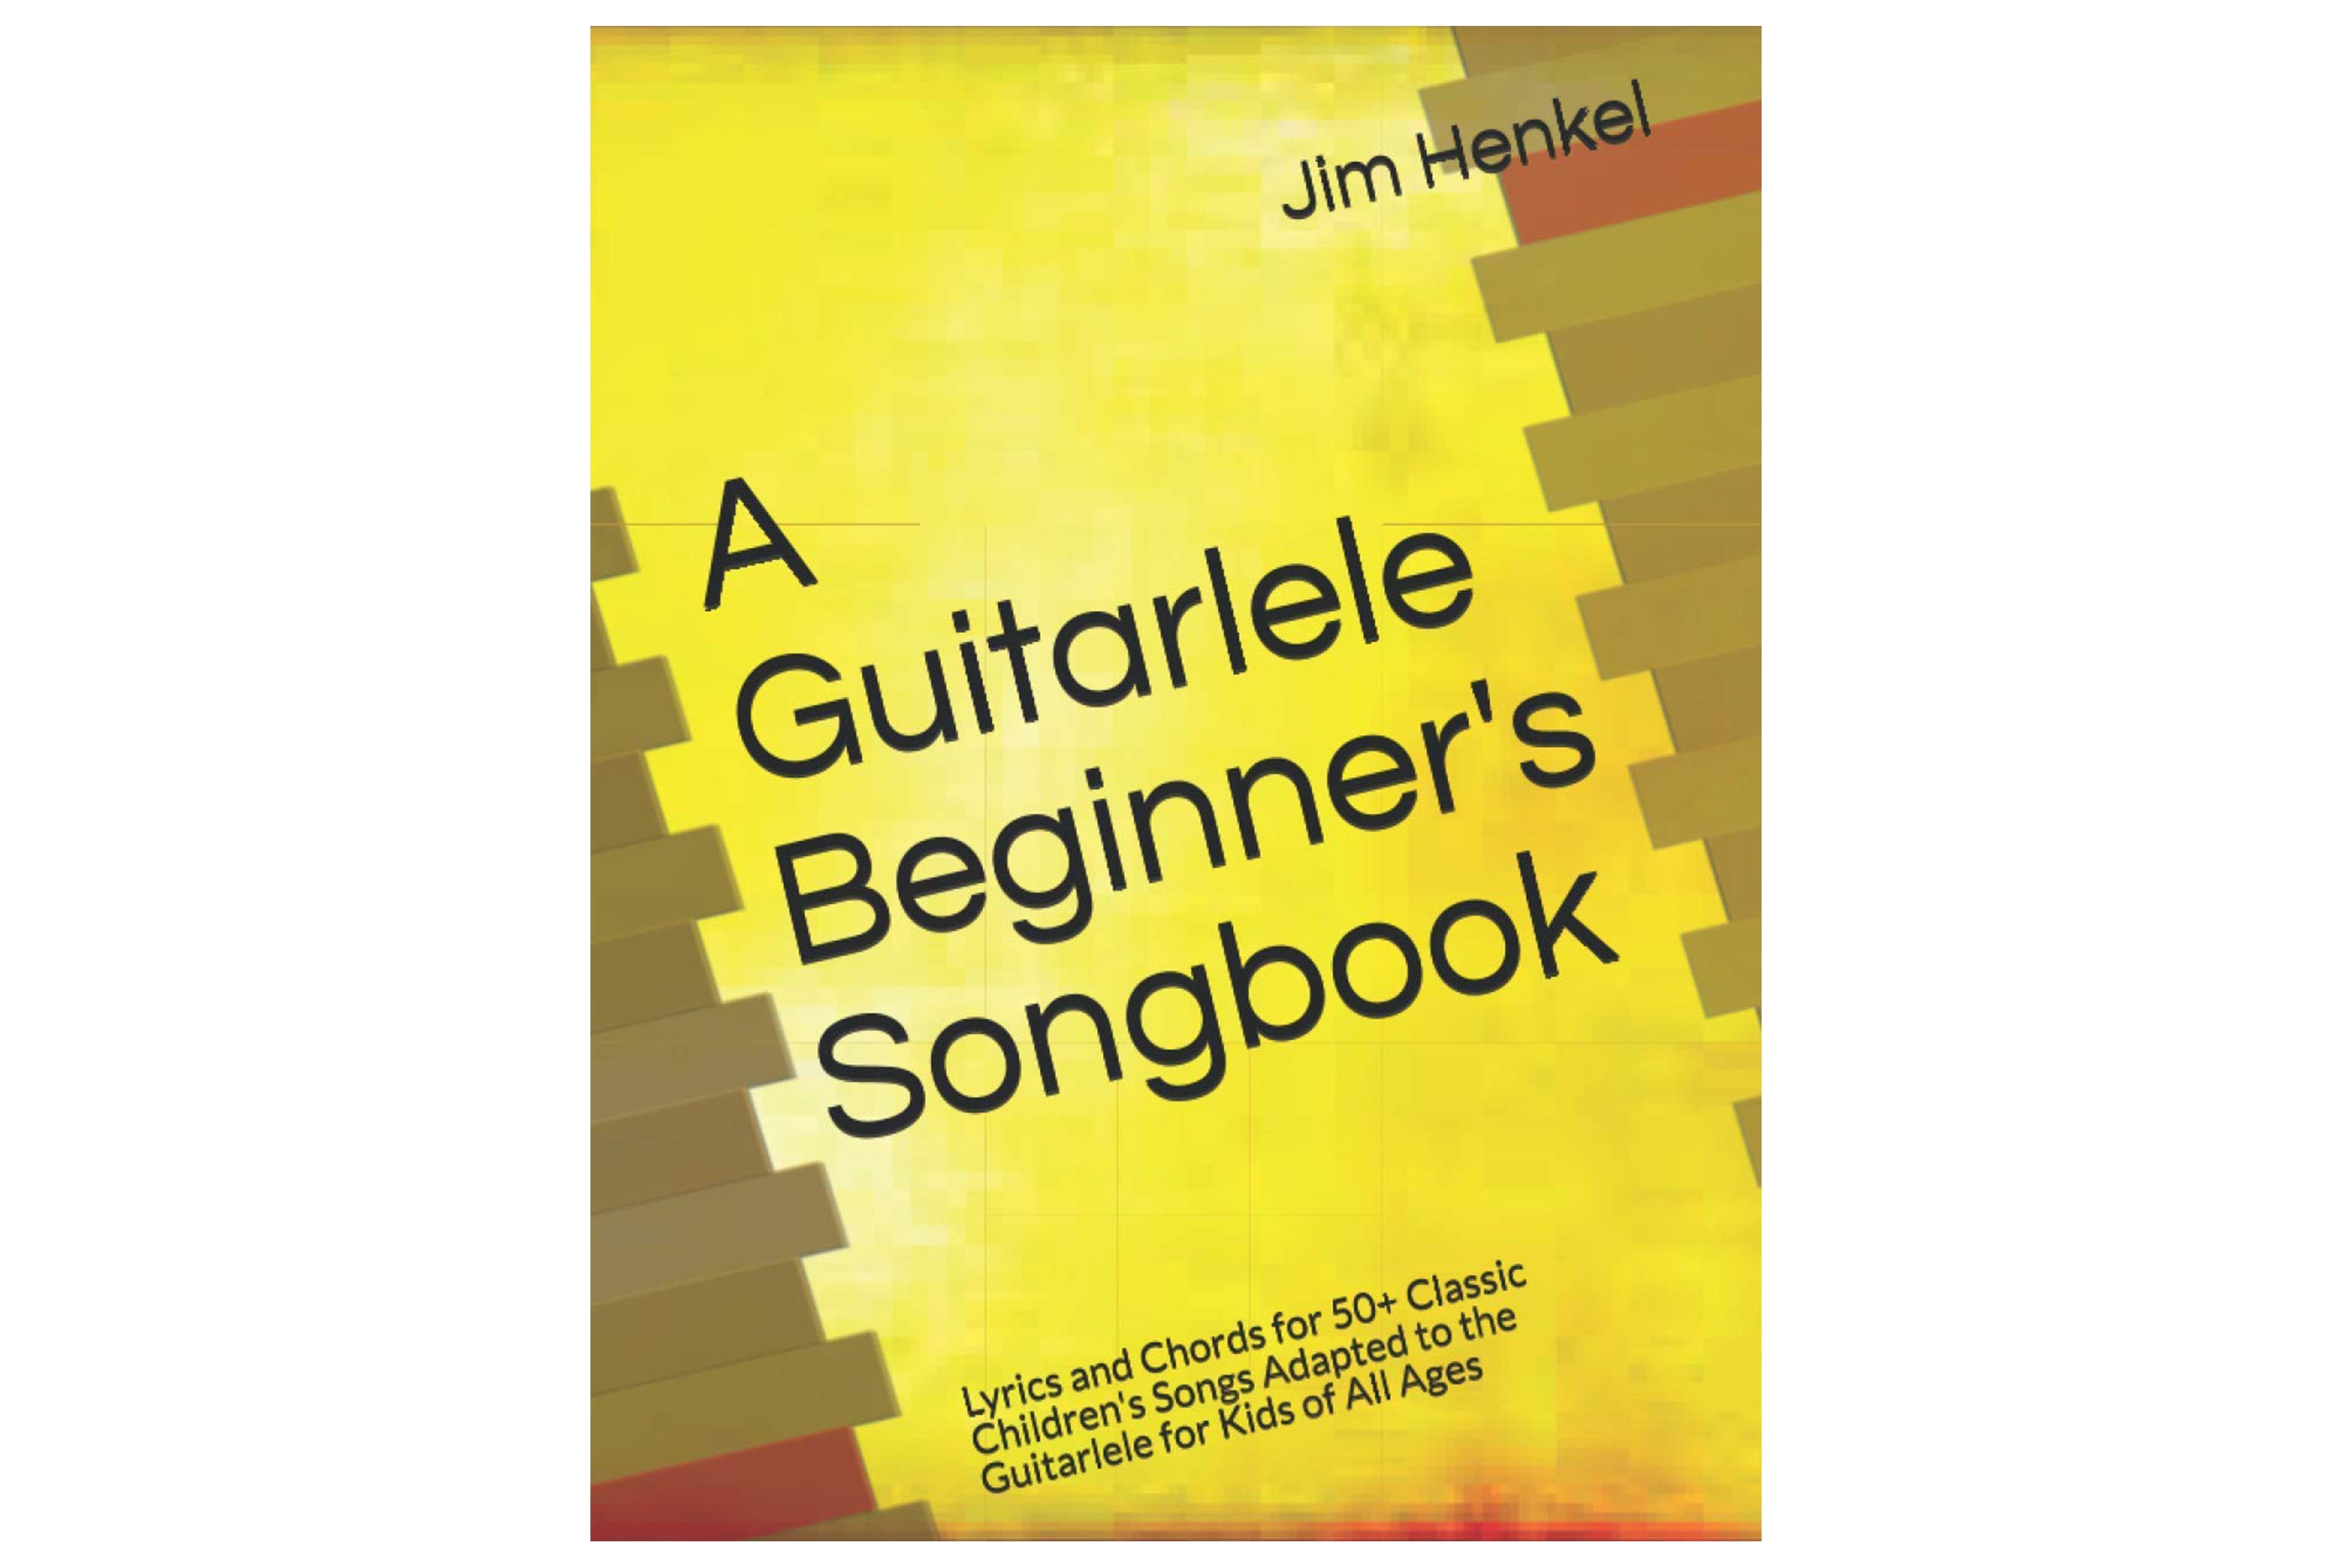 Guitarlele Beginner's Songbook: Lyrics and Chords for 50+ Classic Children's Songs